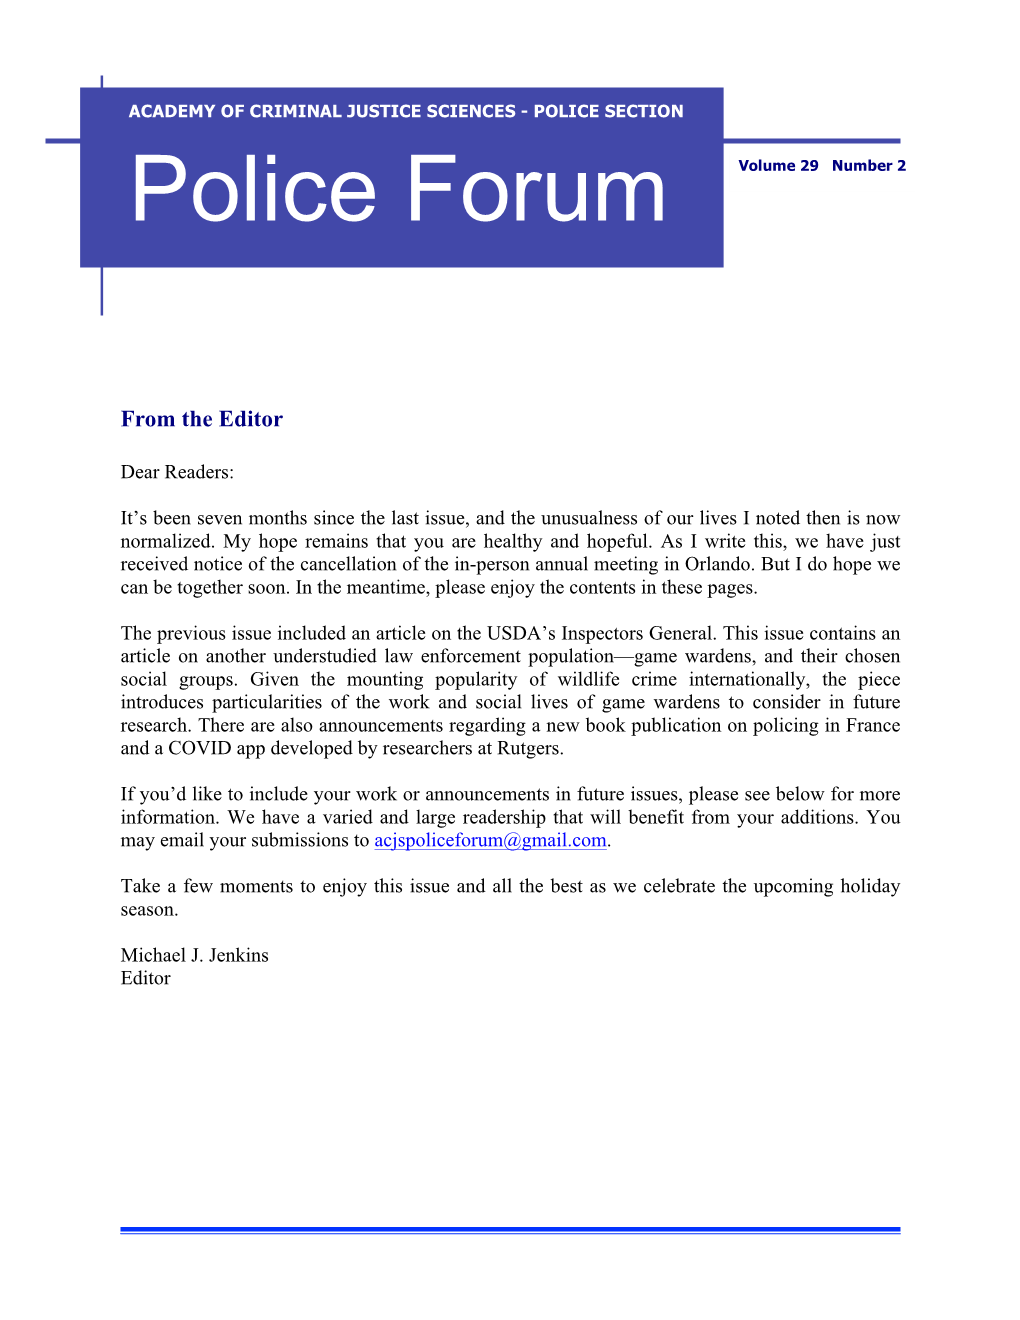 Police Forum